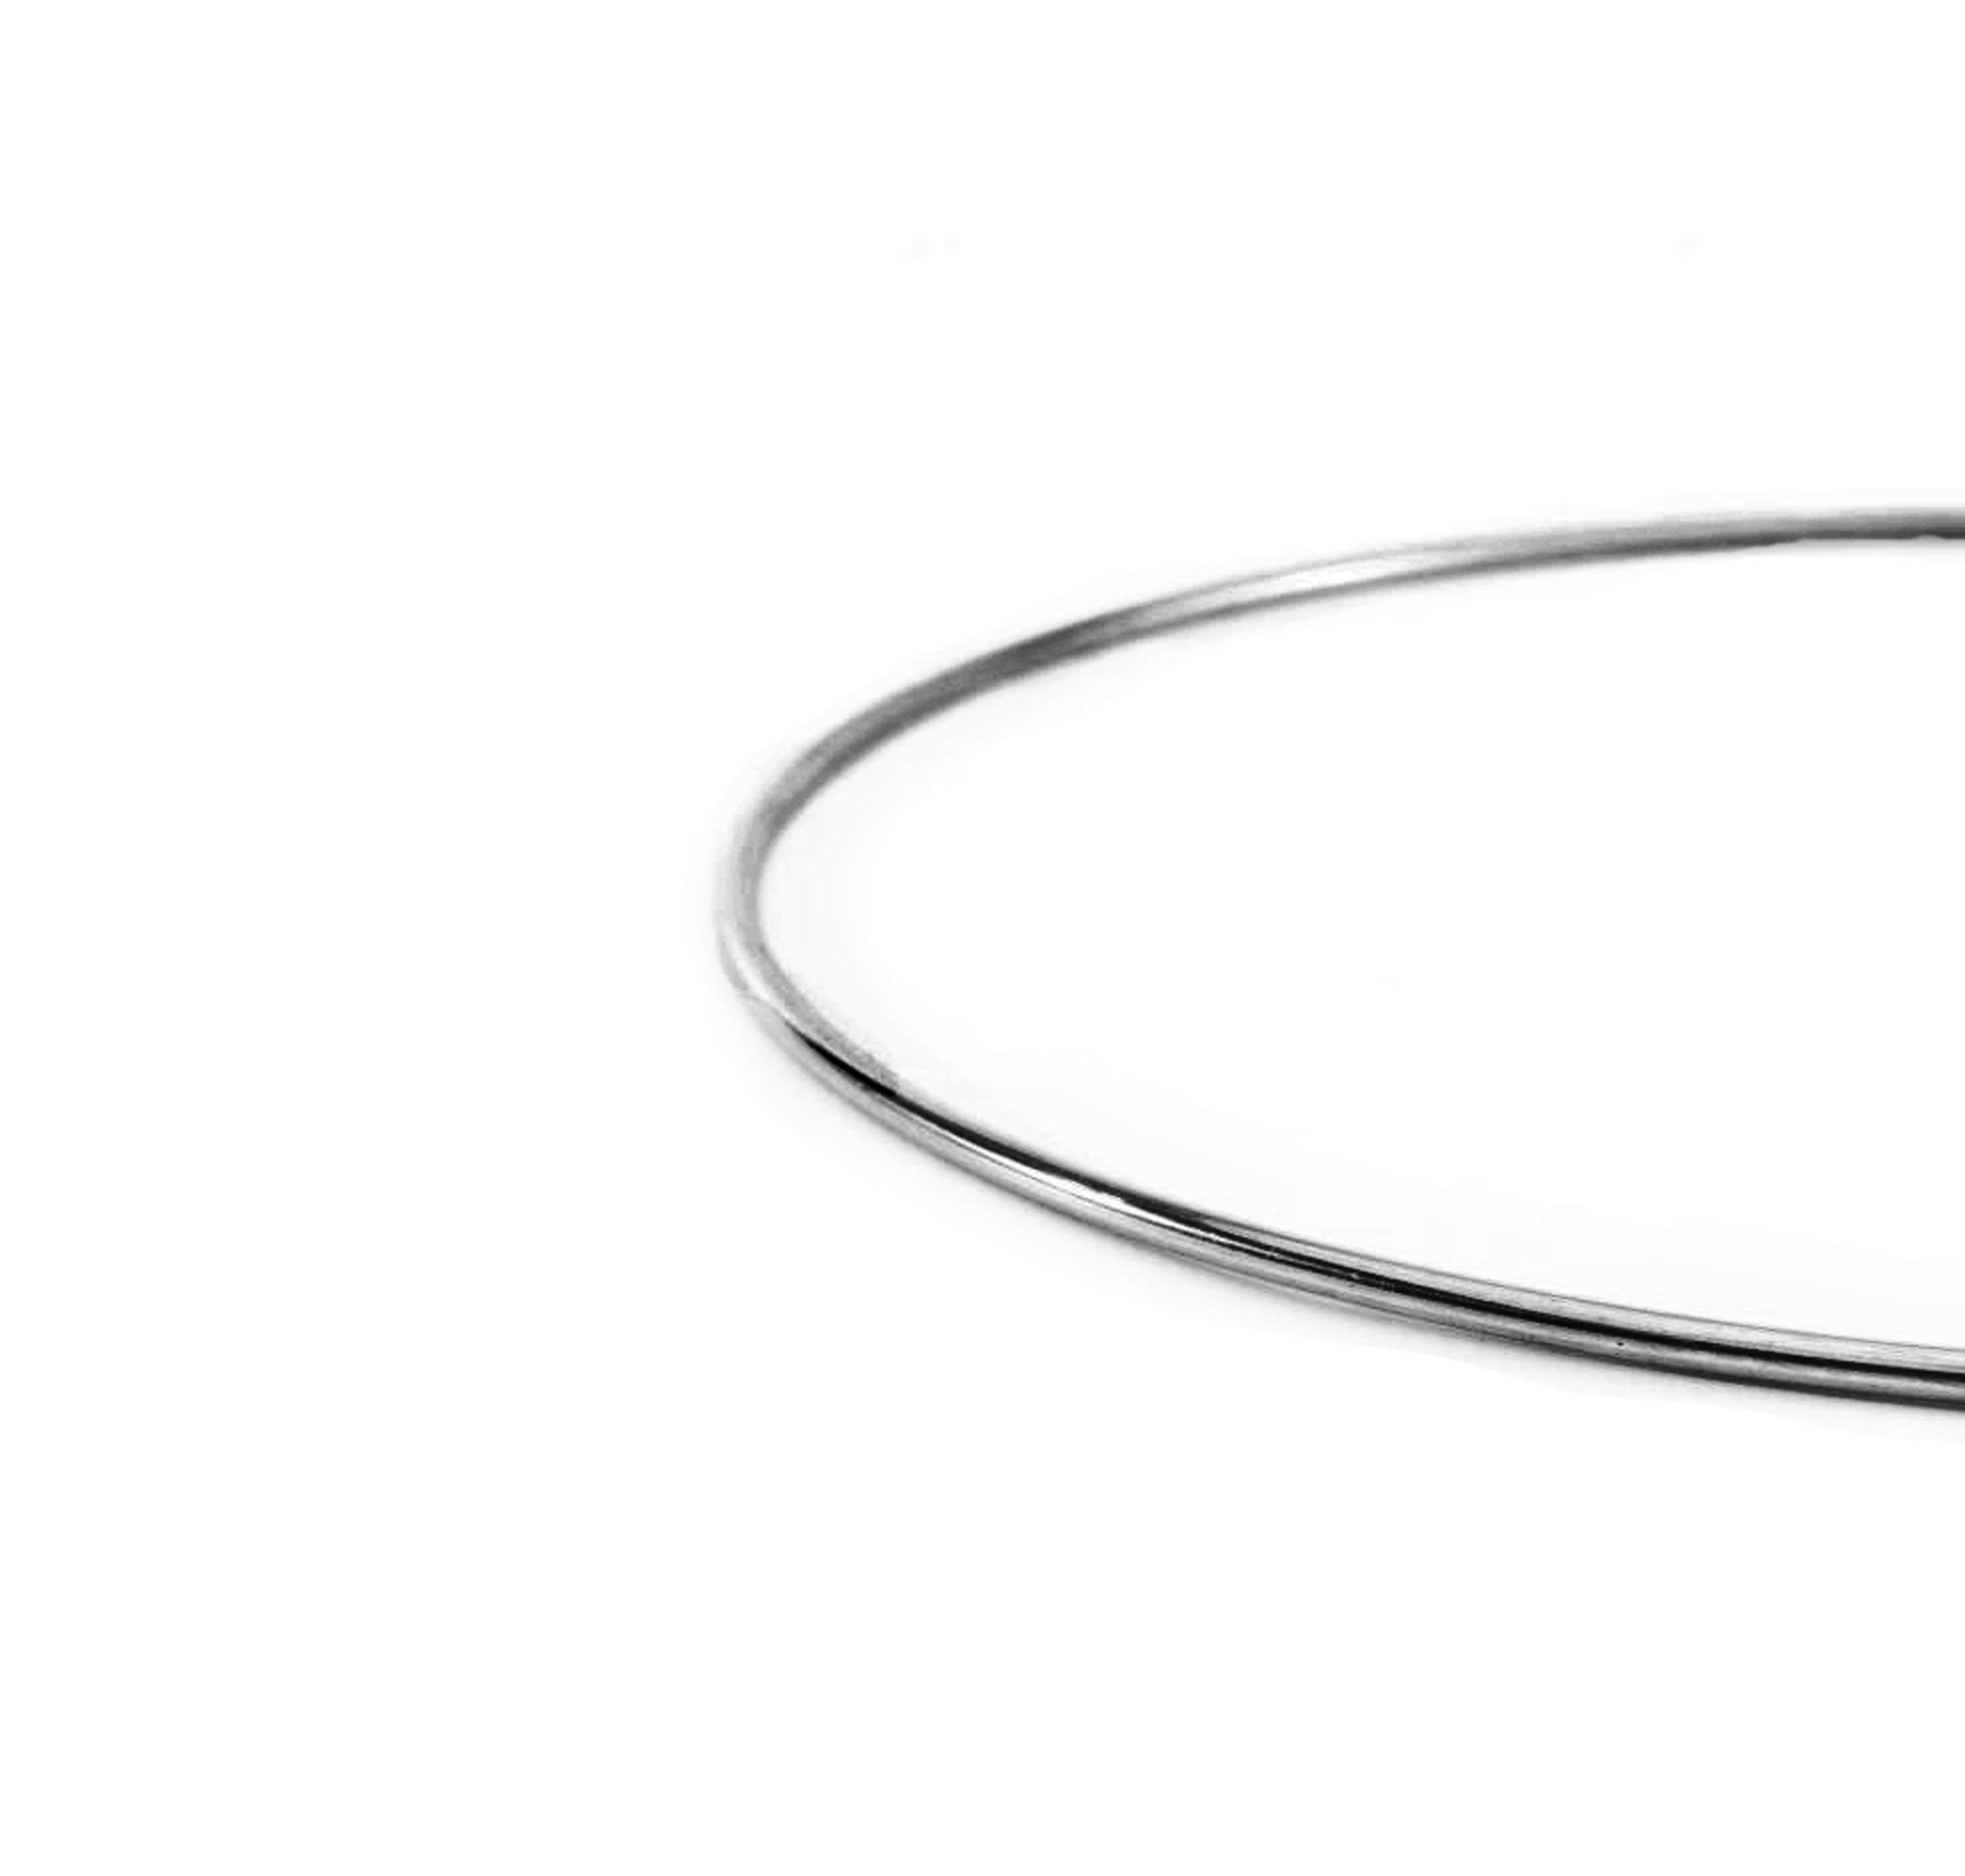 PEPRMROE 12 Pcs 4 Inch Silver Metal Rings Hoops Macrame Ring for